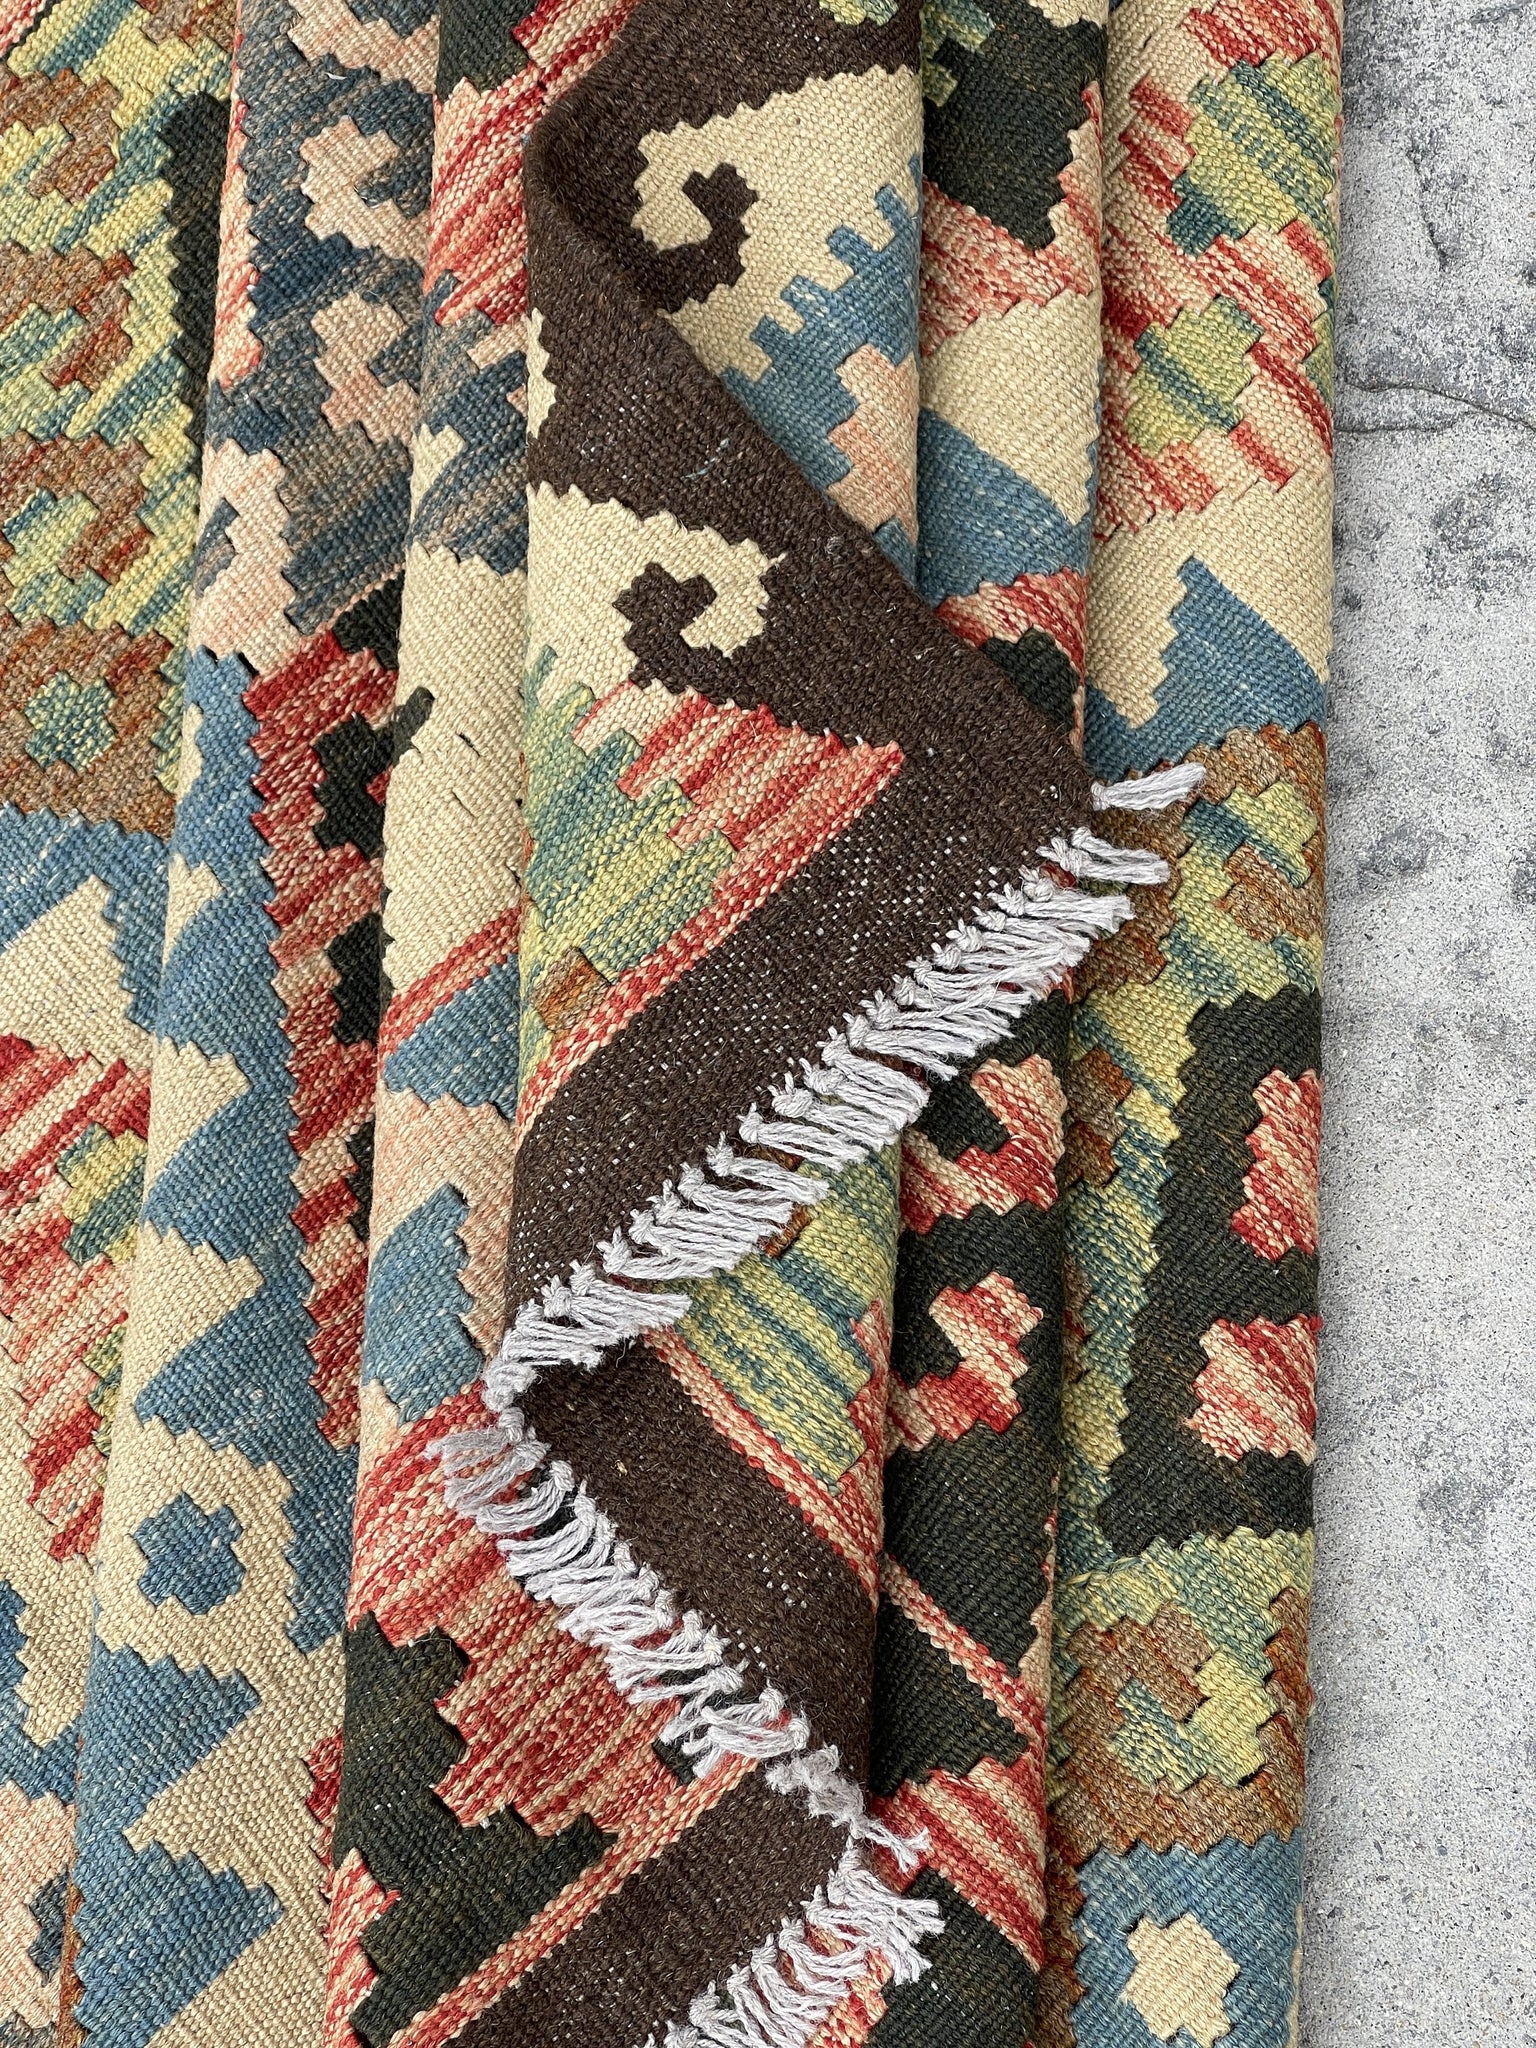 7x10 (215x305) Handmade Afghan Kilim Flatweave Rug | Ivory Cream Green Brown Red Sky Blue | Boho Moroccan Outdoor Wool Turkish